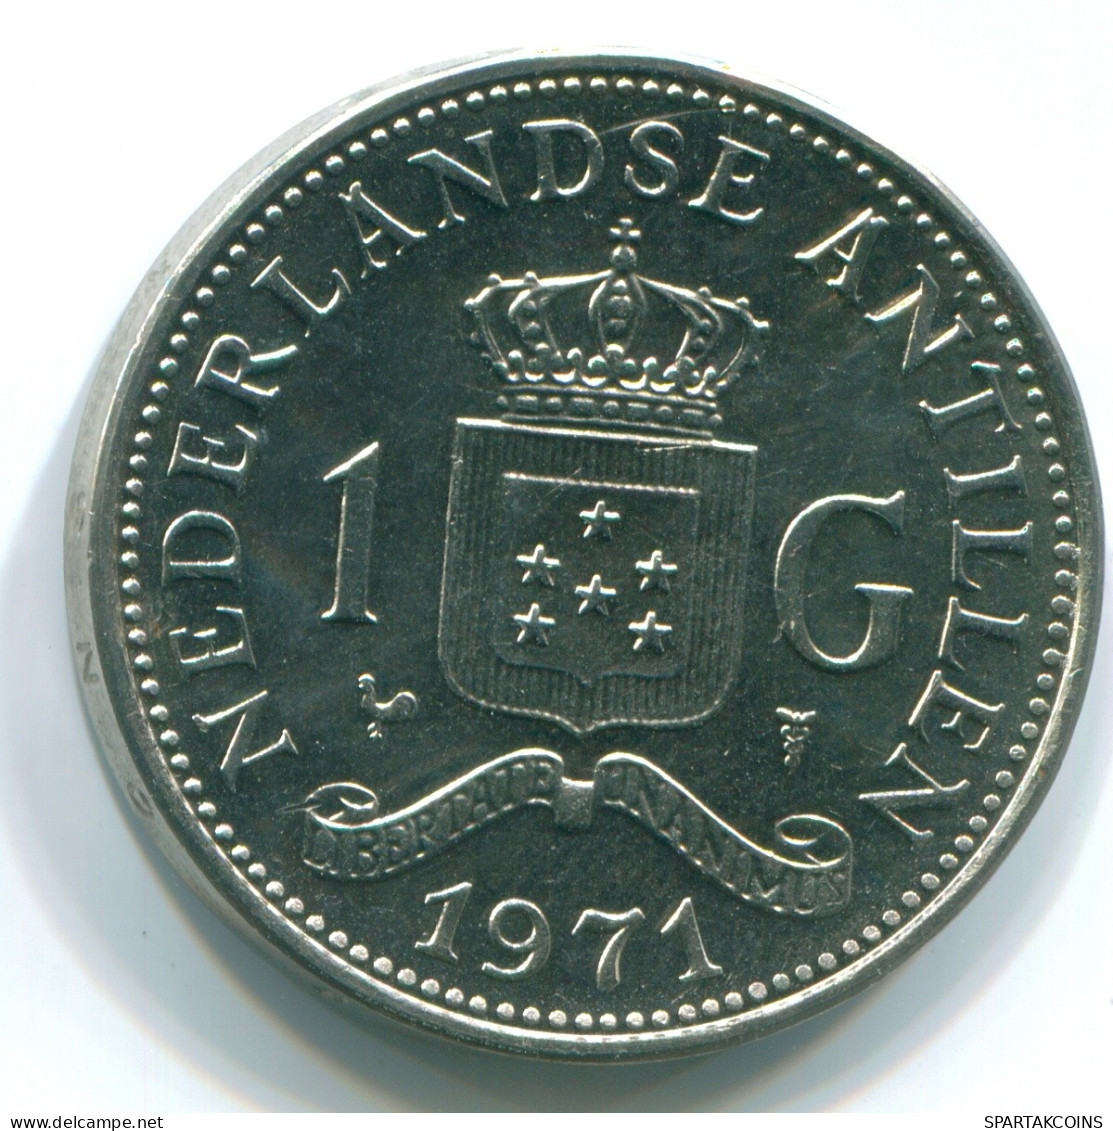 1 GULDEN 1971 NETHERLANDS ANTILLES Nickel Colonial Coin #S11914.U.A - Netherlands Antilles